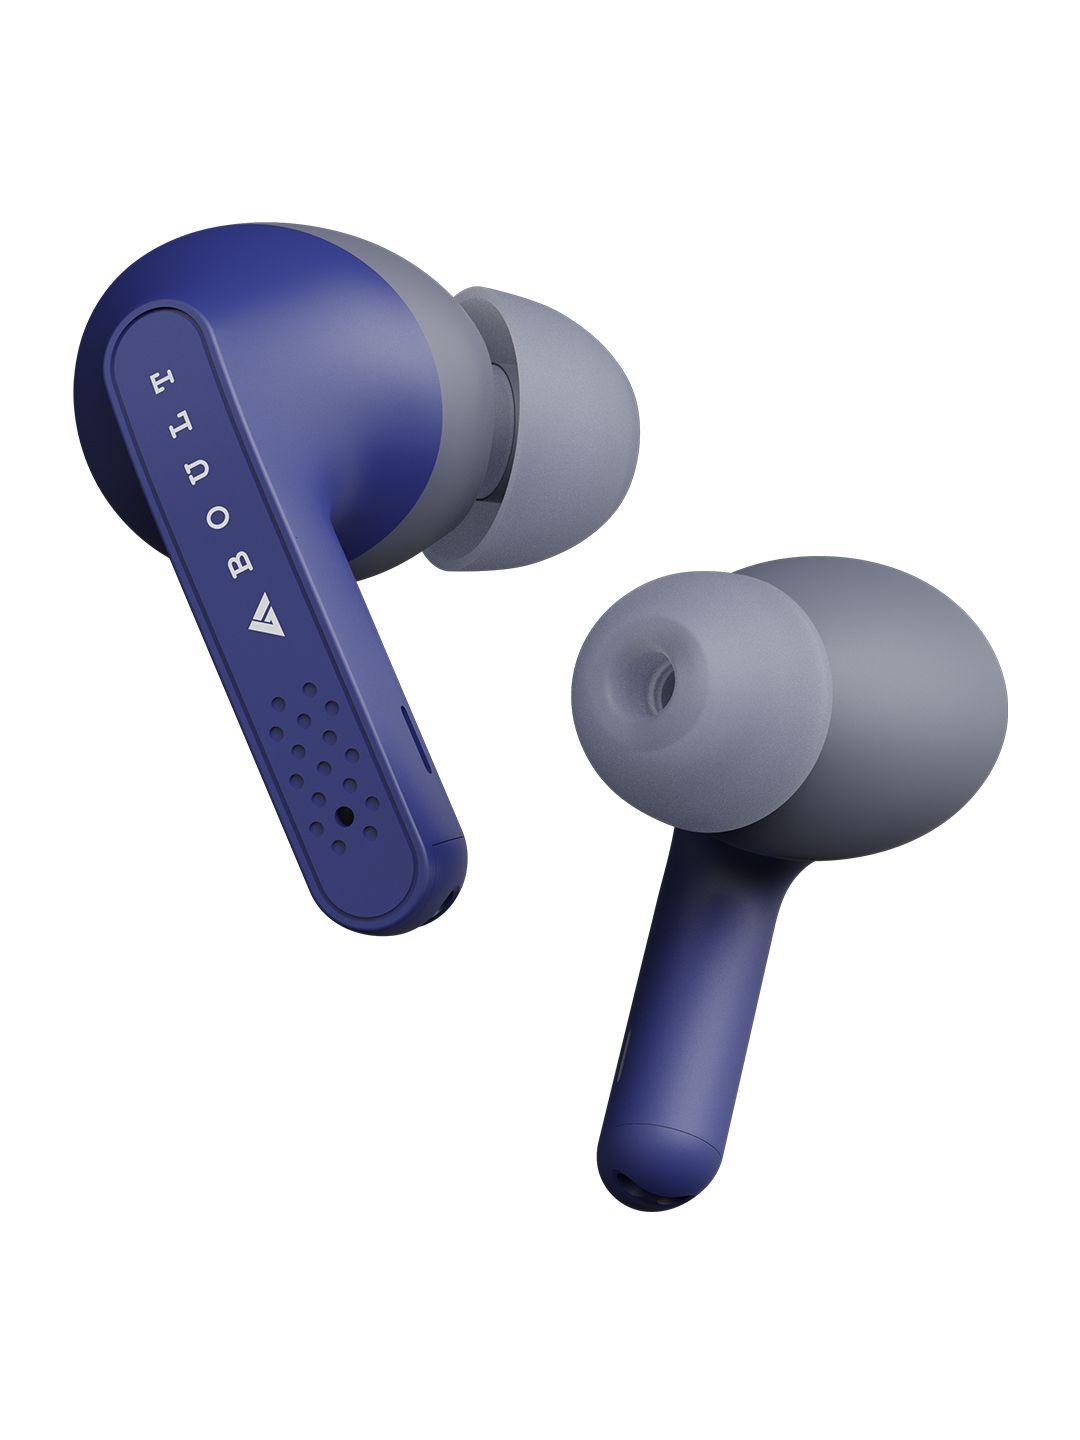 boult audio blue airbass gearpods true wireless bluetooth earbuds